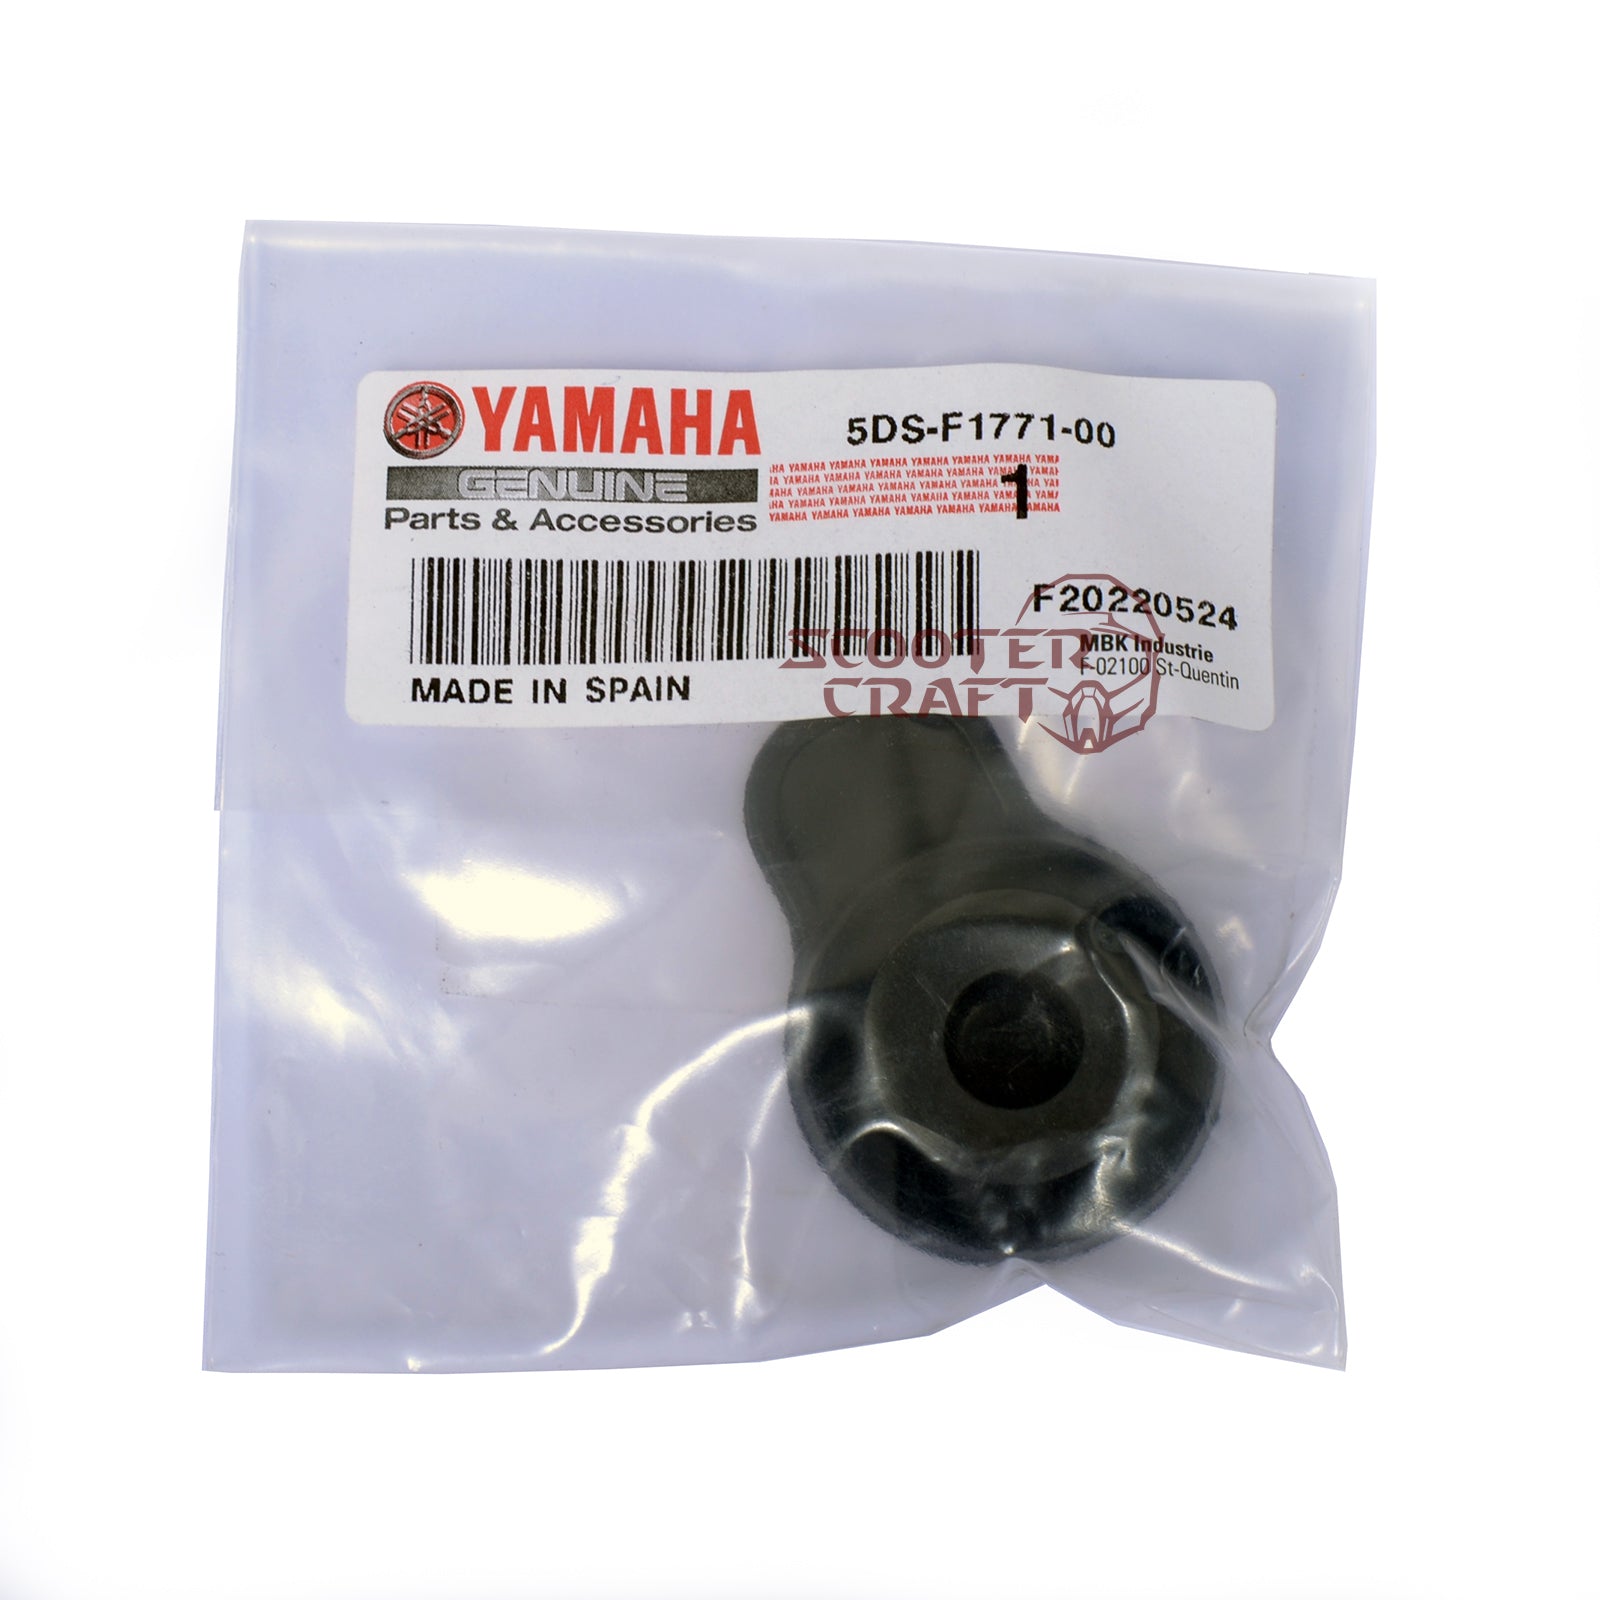 Coolant reservoir cap Yamaha YZF-R 125, YP 150 Majesty, VP 300 Versity, YP 400 R X-MAX, genuine 5DS-F1771-00-00